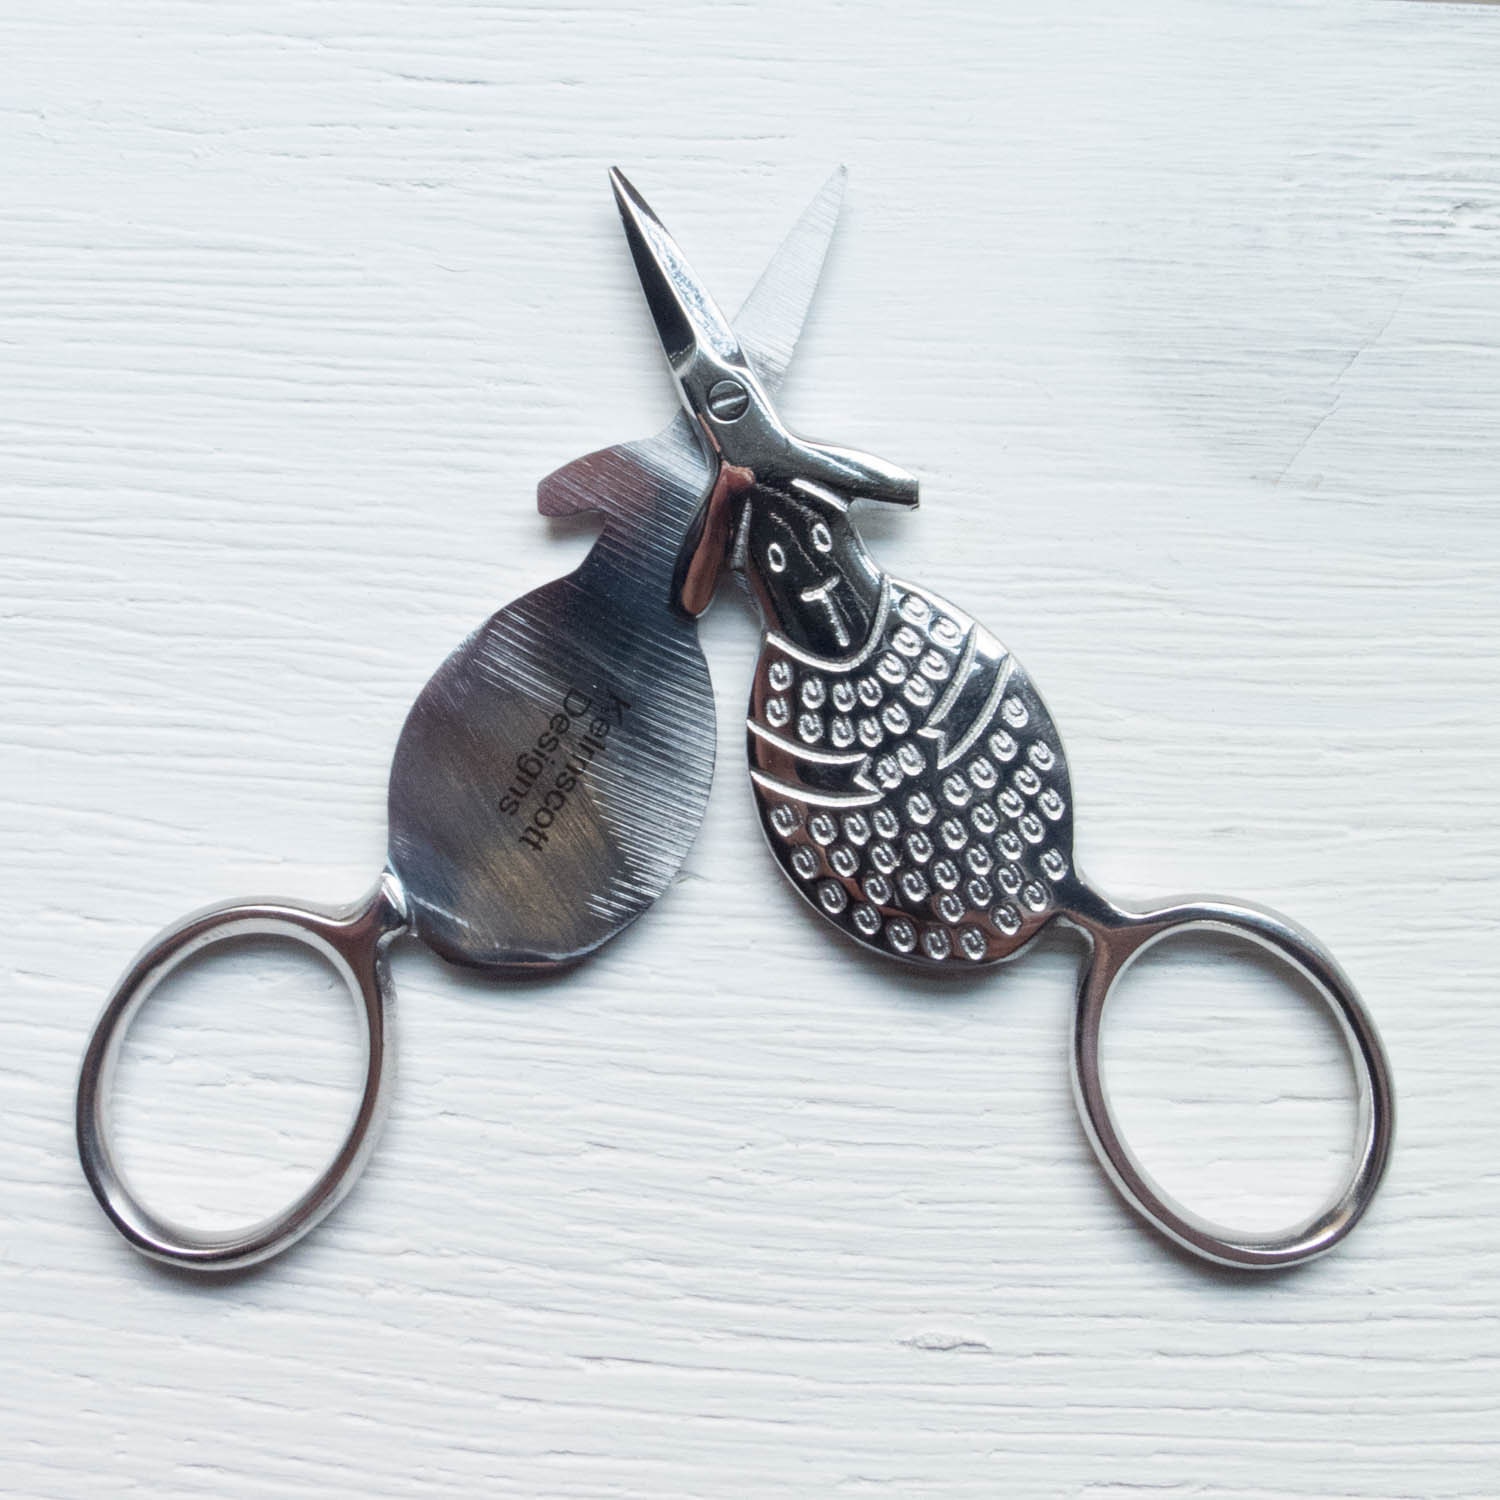 Embroidery Scissors Sewing Scissors, Thread Snips, Cute Scissor